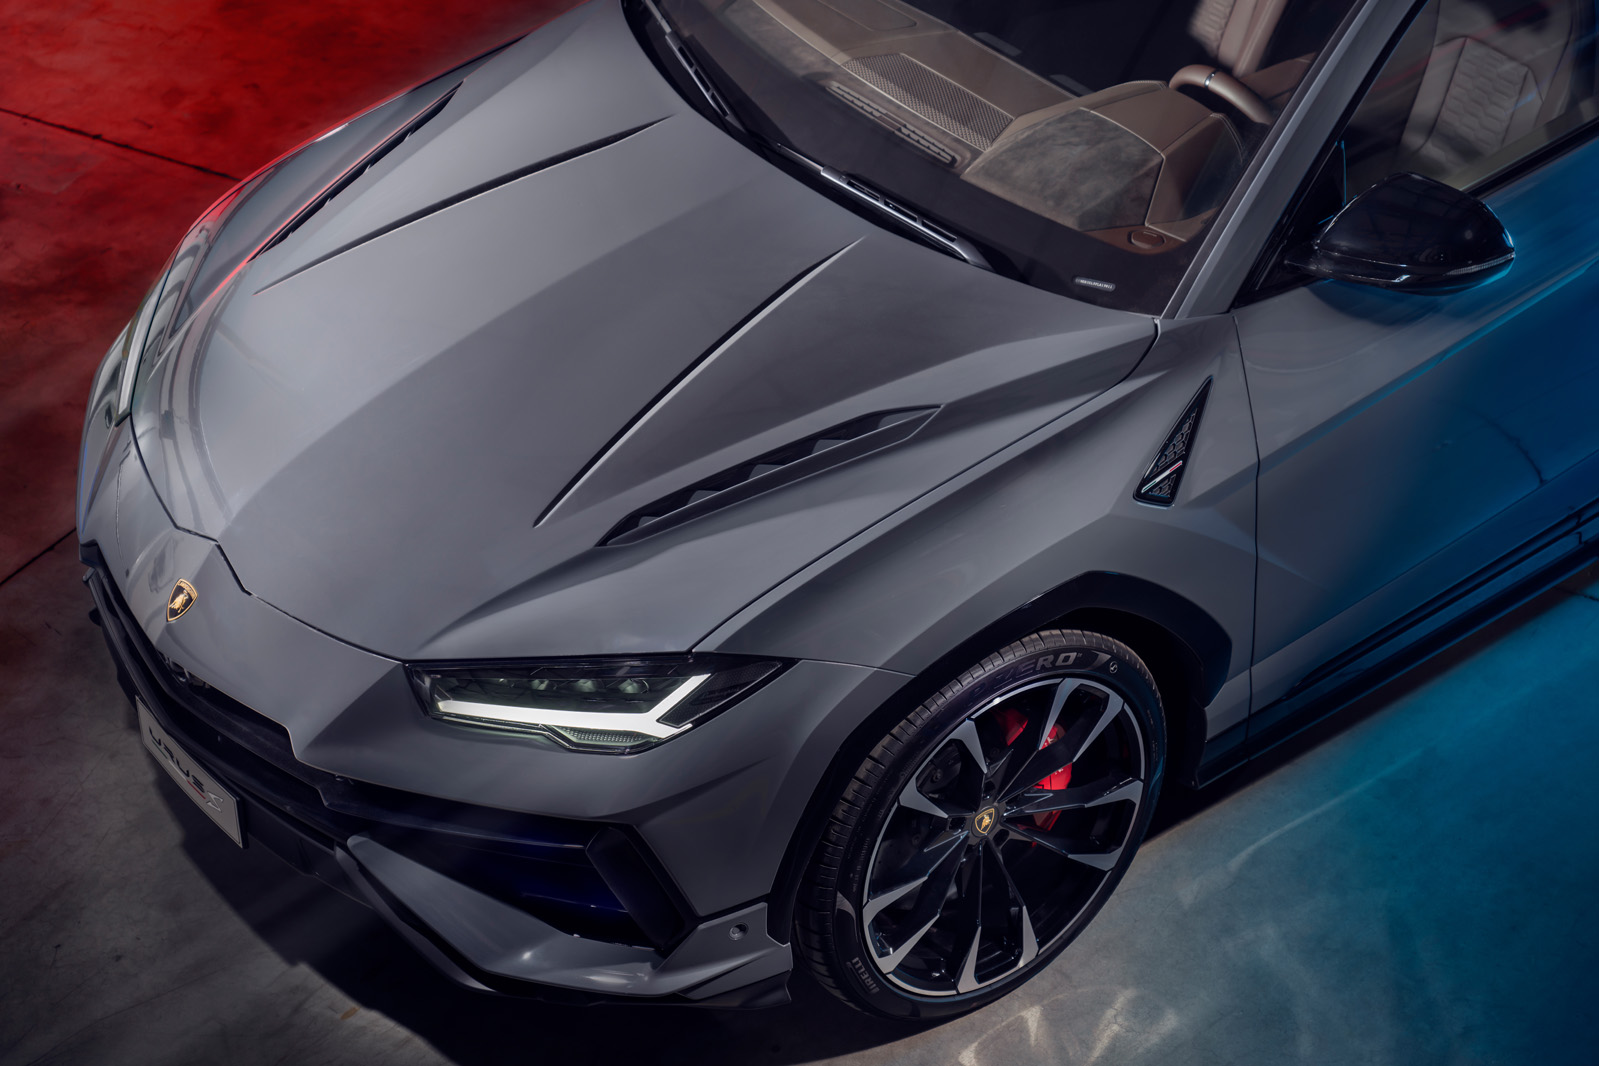 Entry-level Lamborghini Urus gains more power and design changes